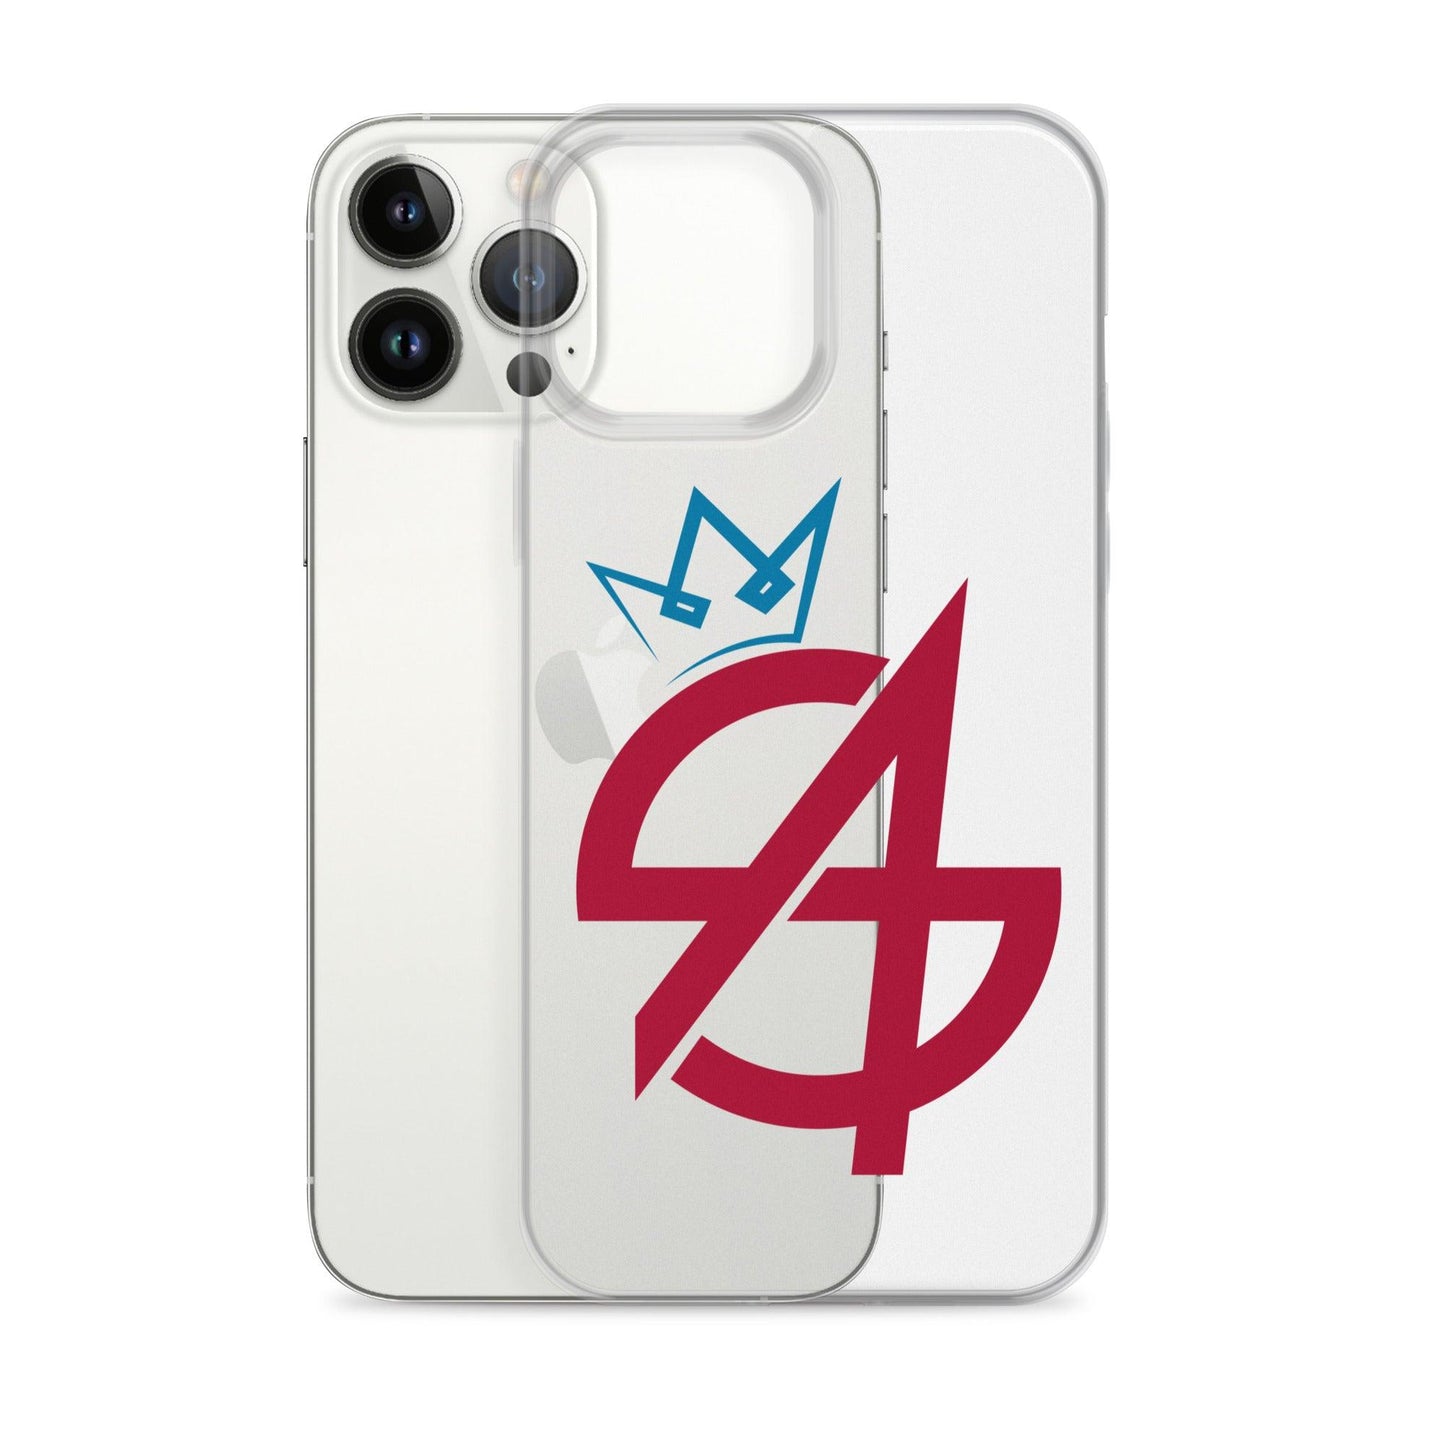 SeQuoia Allmond "Royalty" iPhone Case - Fan Arch